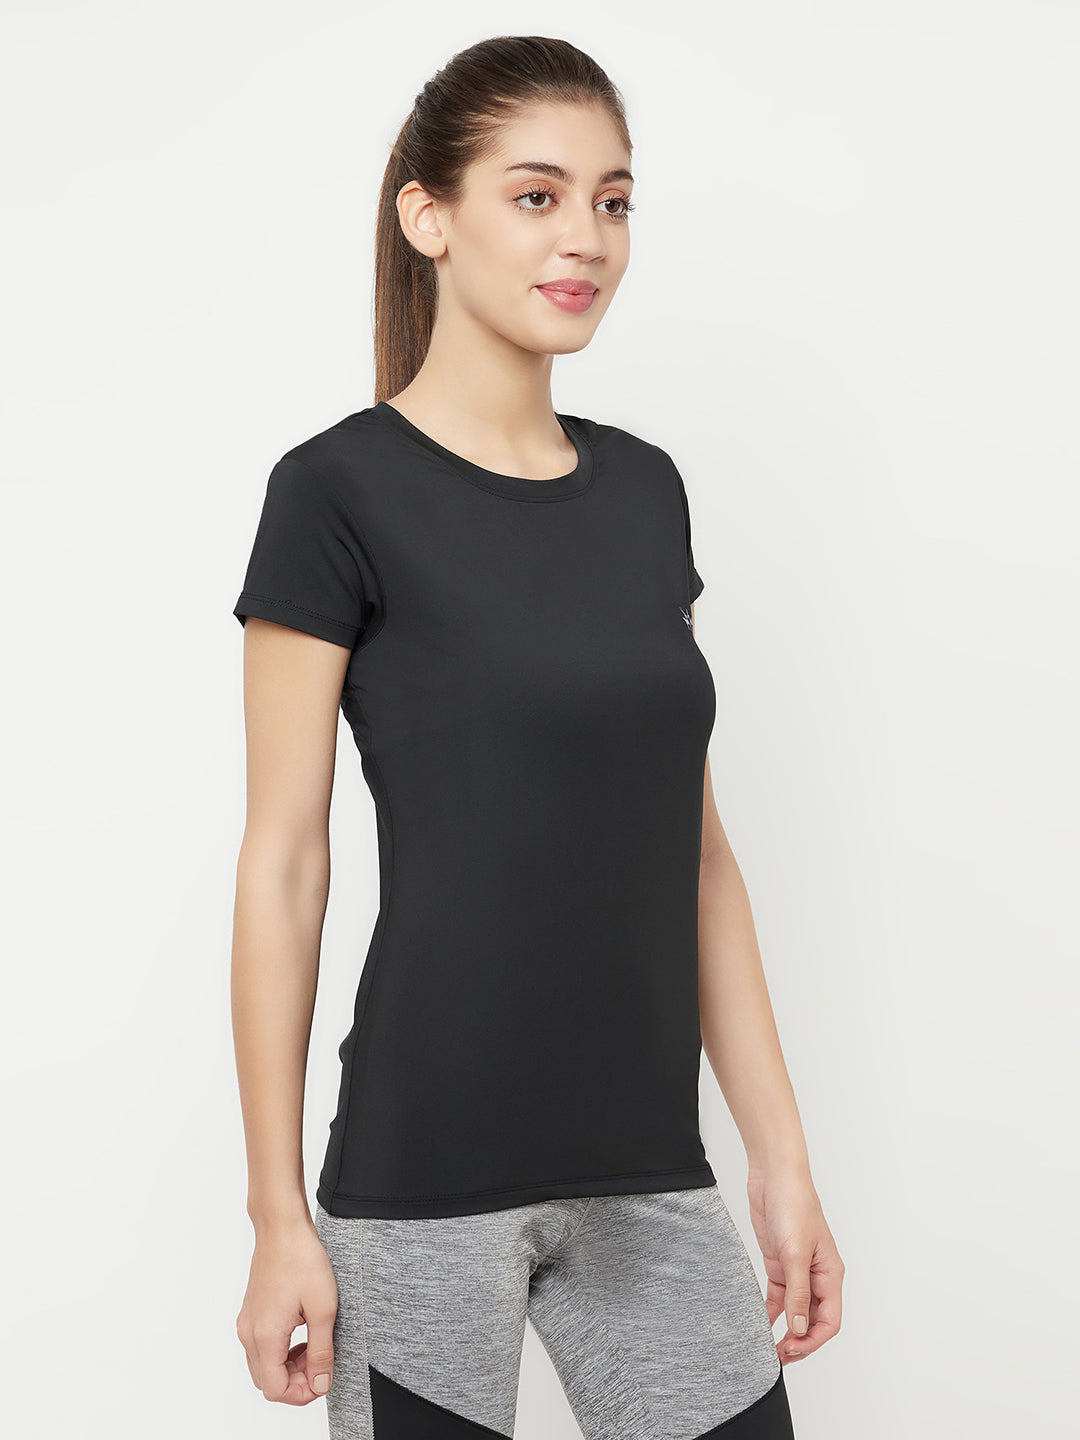 Black Round Neck Sports T-Shirt - Women T-Shirts